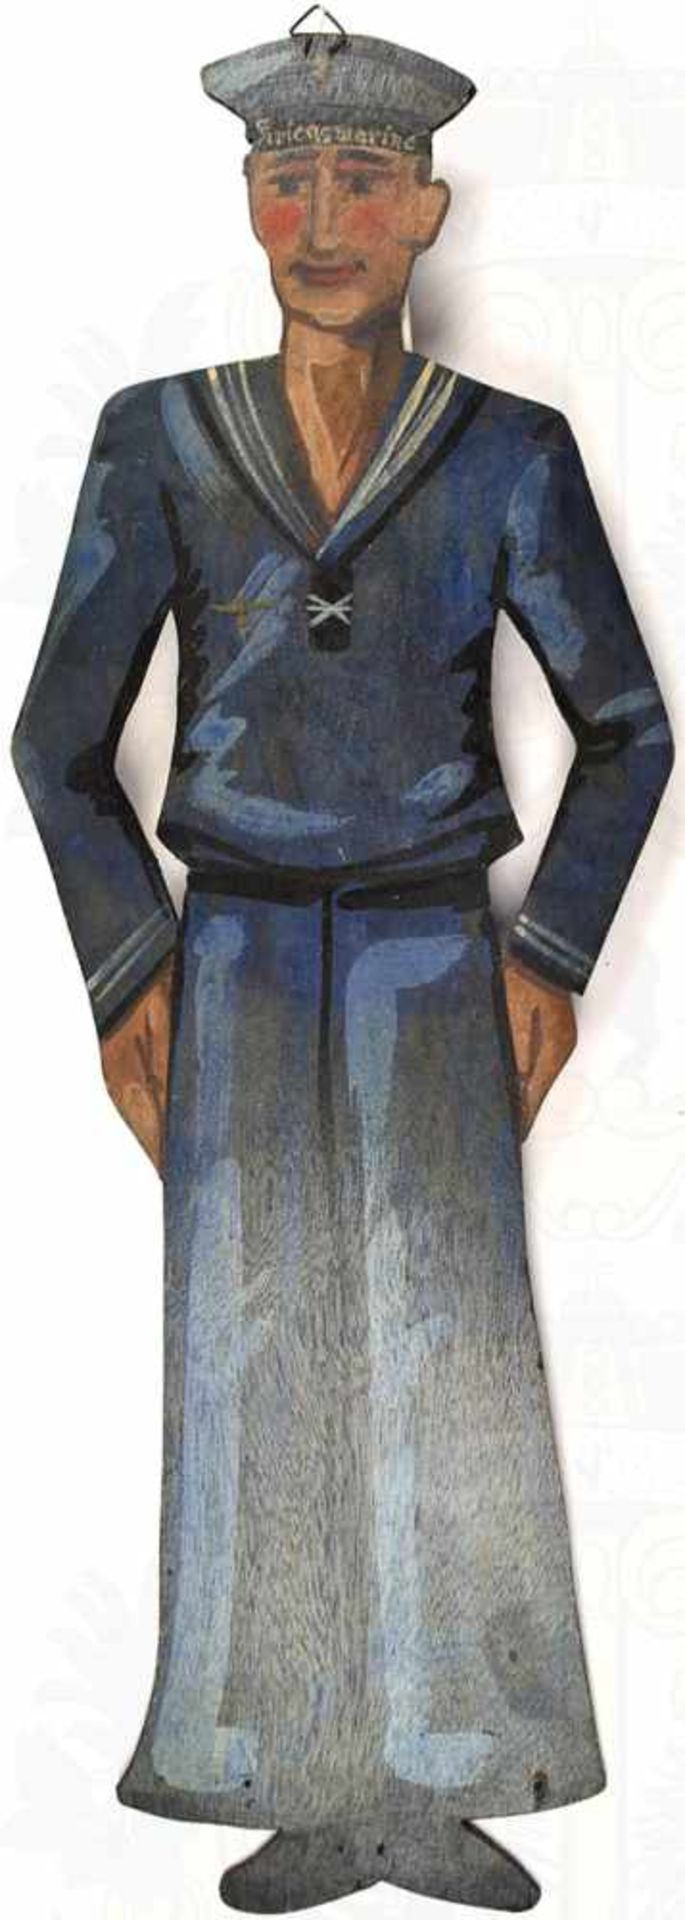 KONVOLUT, Bordarbeit:, Matrosenfigur in blauer Uniform, Mützenaufschrift „Kriegmarine“, Sperrholz,